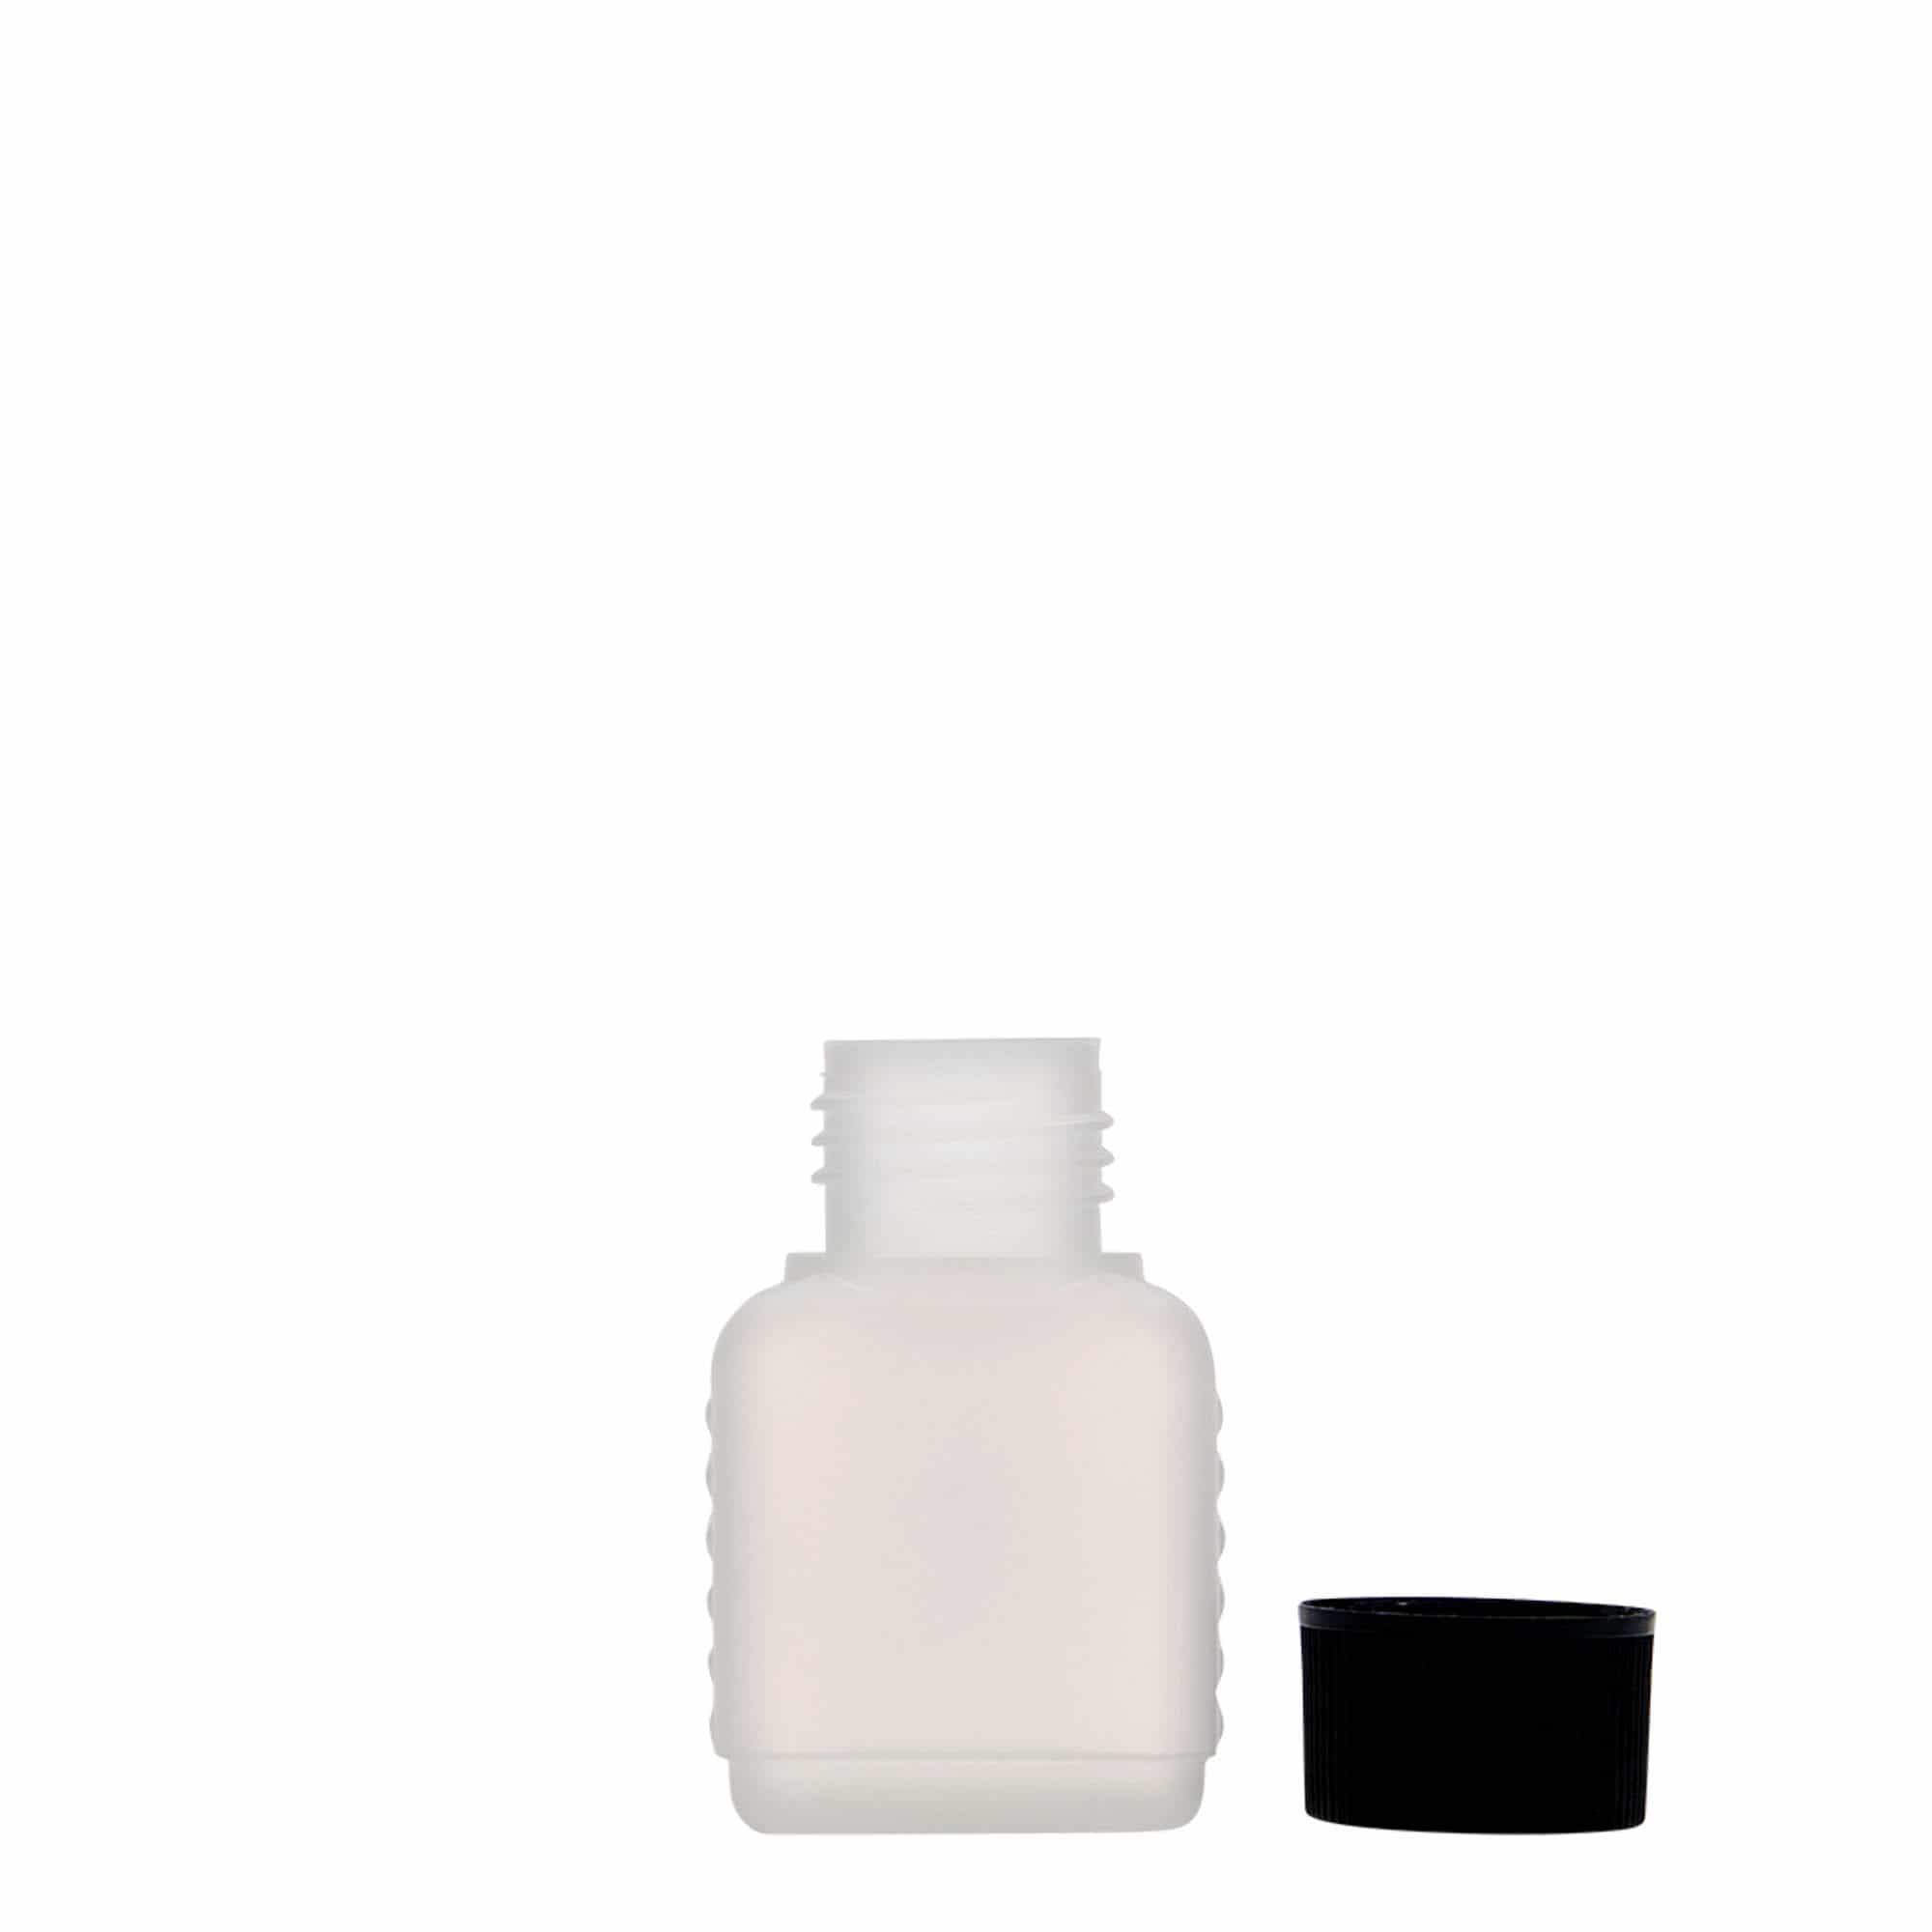 50 ml canister bottle, rectangular, HDPE plastic, natural, closure: DIN 25